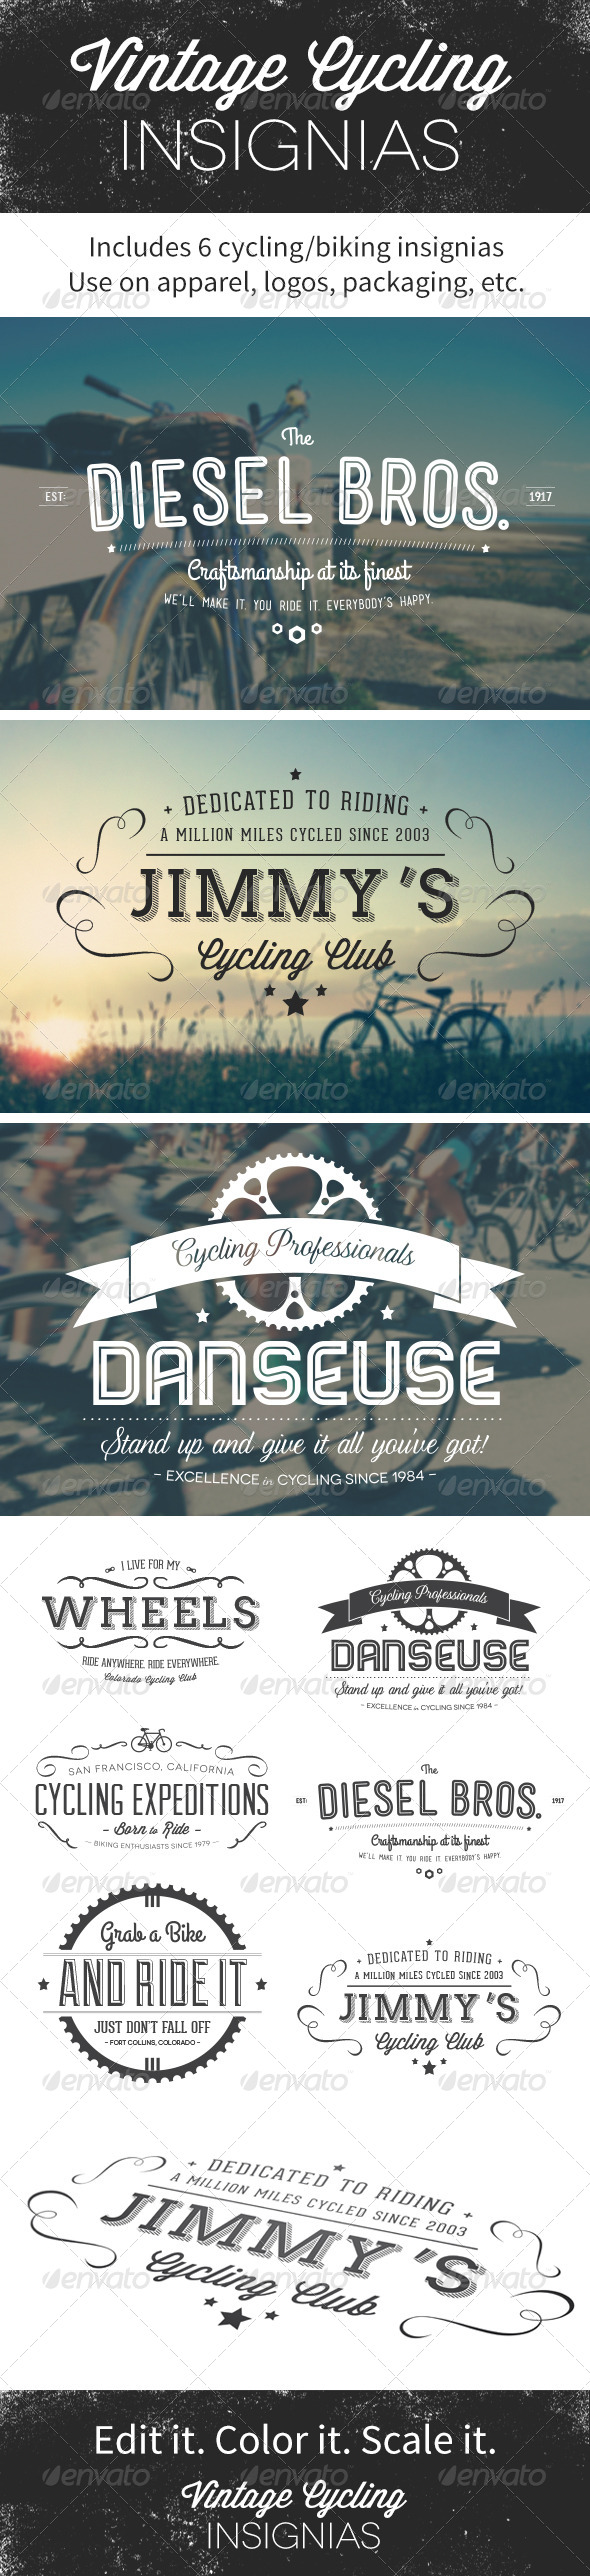 Vintage Cycling Insignias | Logos